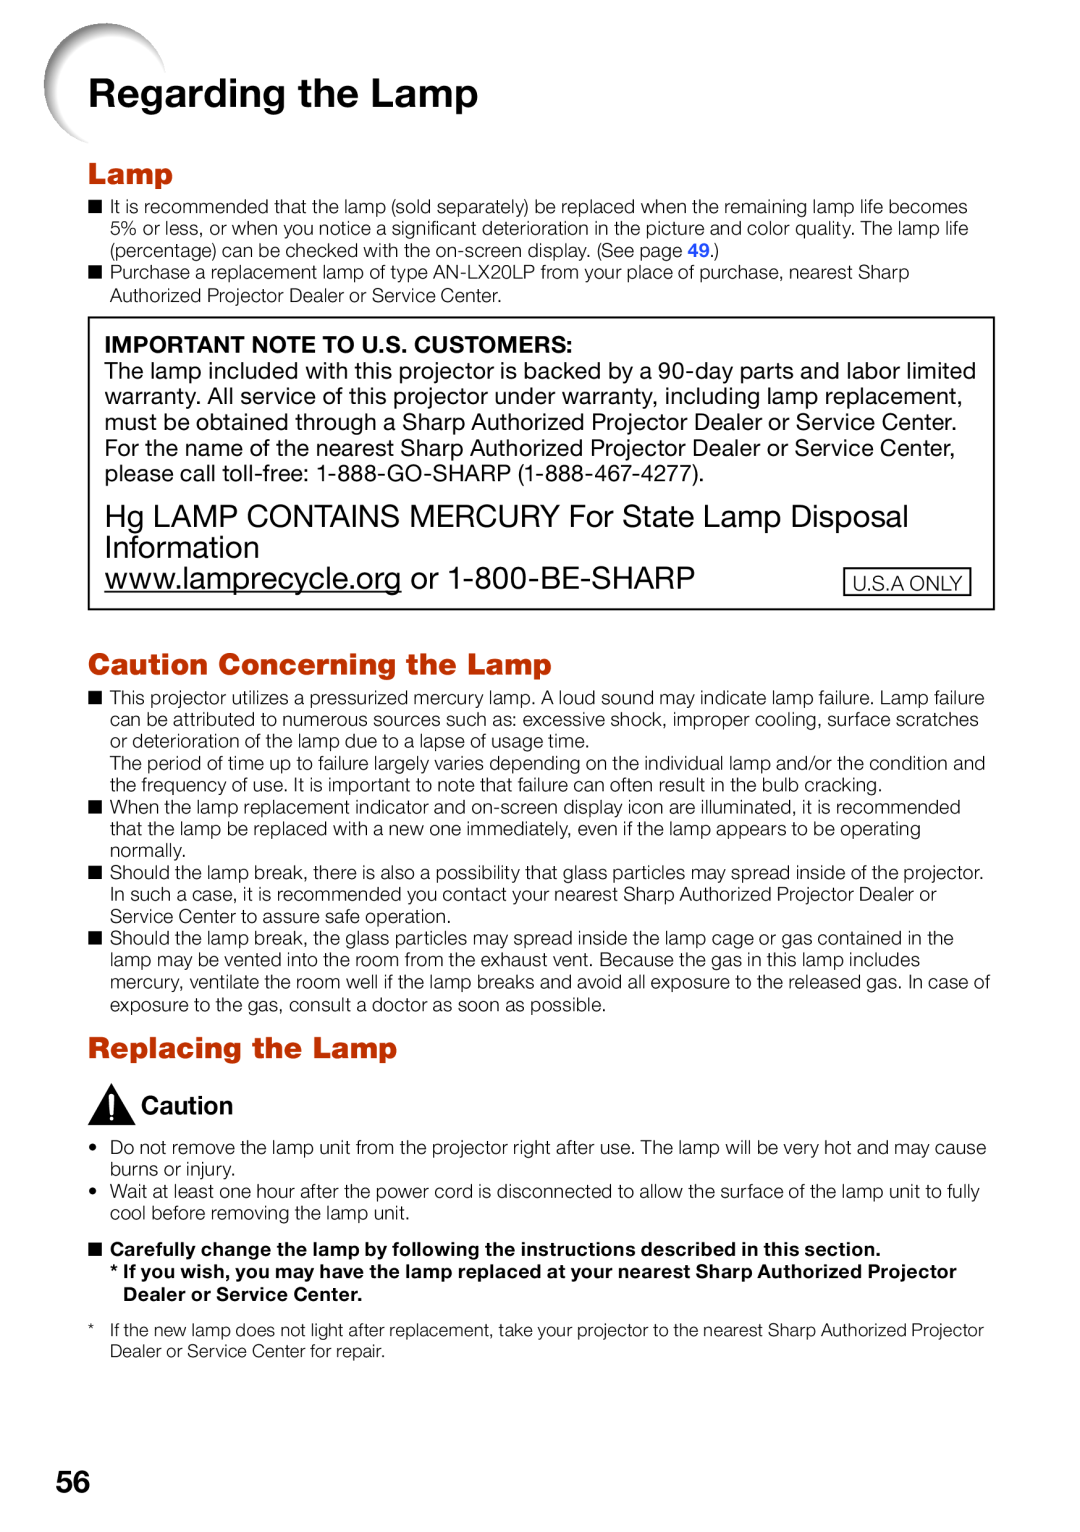 Sharp PG-LX2000 Regarding the Lamp, Caution Concerning the Lamp, Replacing the Lamp, Important Note To U.S. Customers 